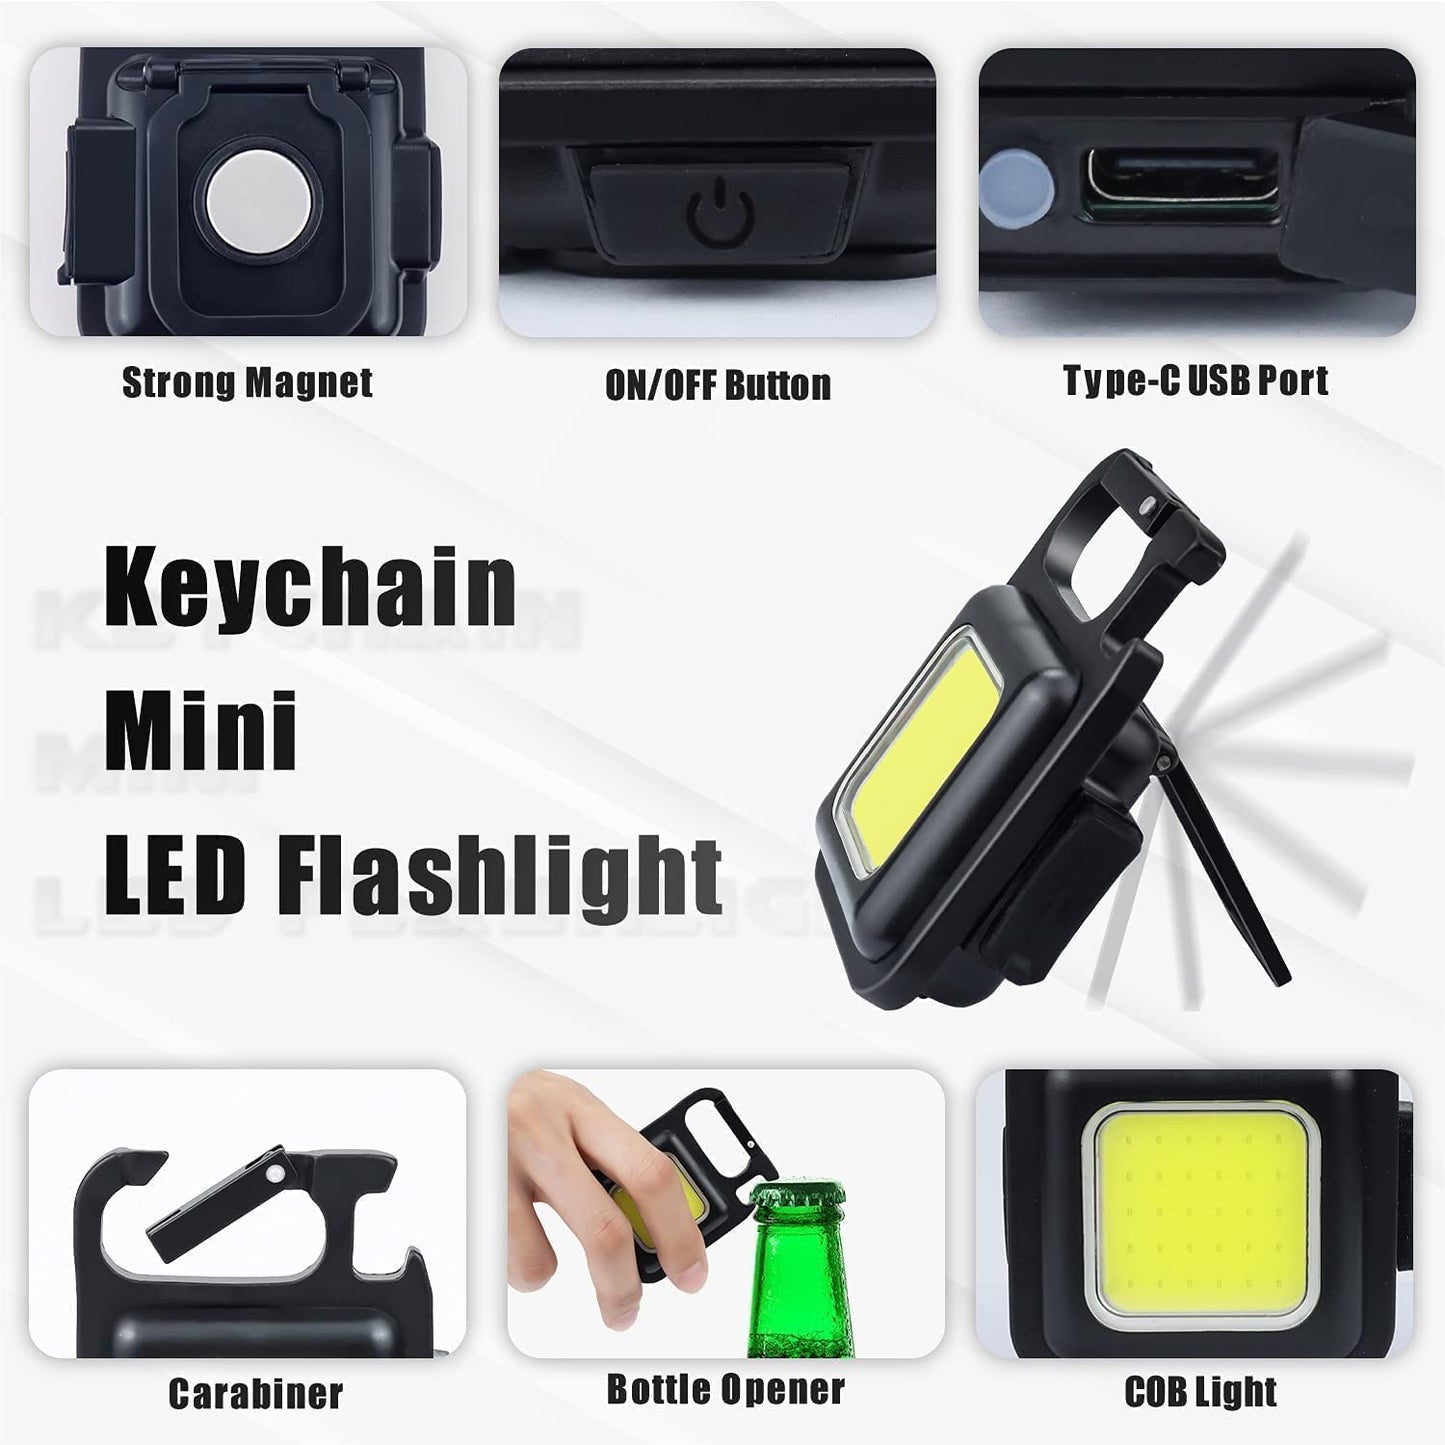 Small Flashlight, Keychain Work Light, USB Rechargeable, Mini LED Handheld Flashlight, 3 Light Modes Portable Pocket Light for Valentine's Day Gift Camping Emergency Fishing, Metal